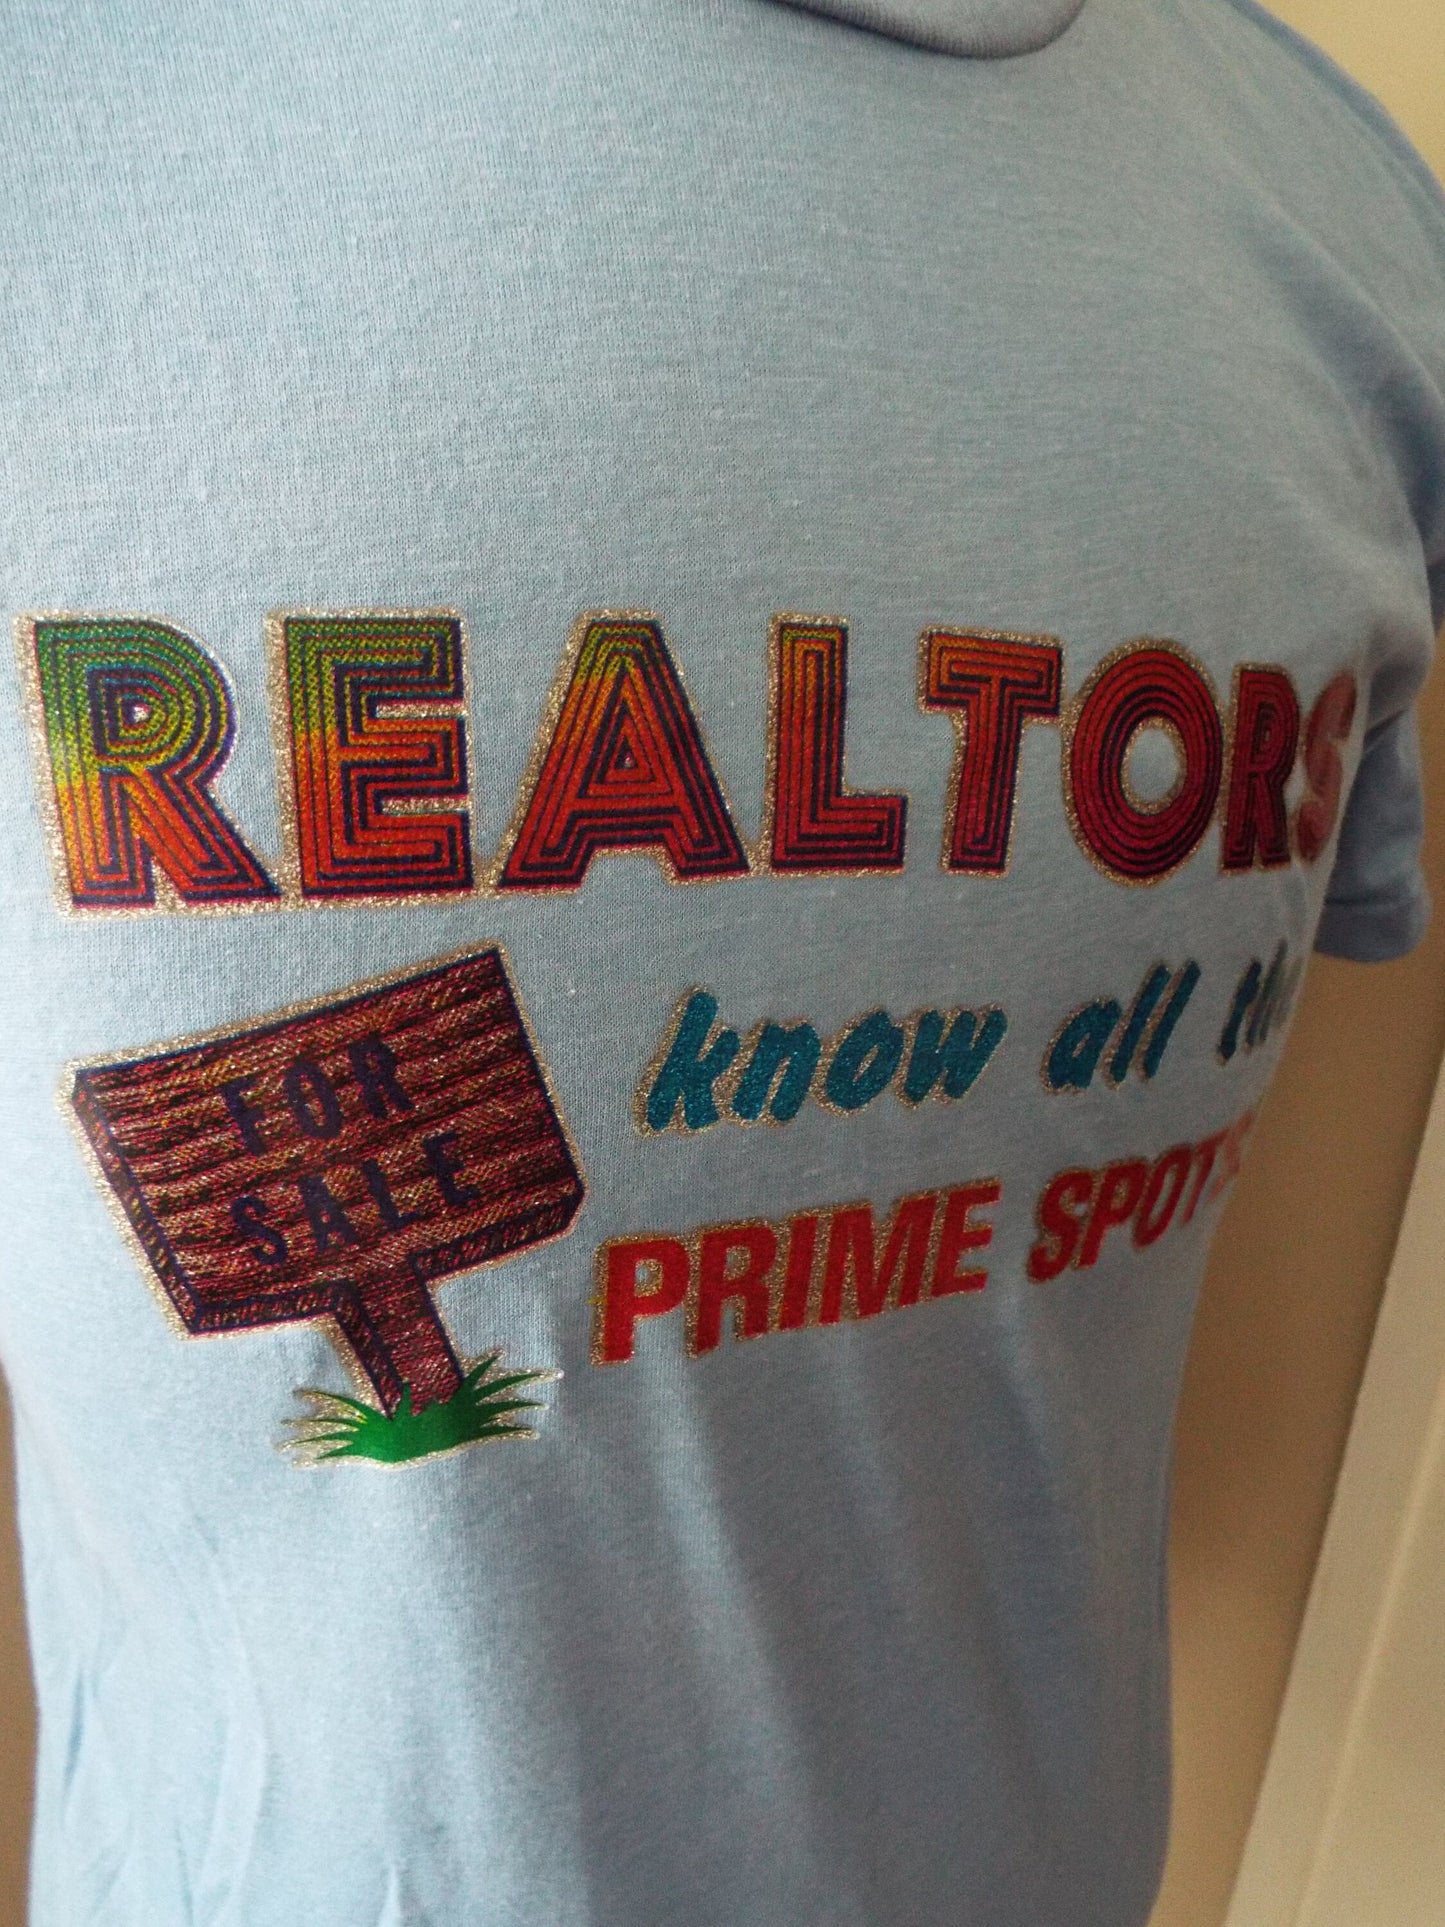 Vintage Realtors Iron On T Shirt by Screen Stars